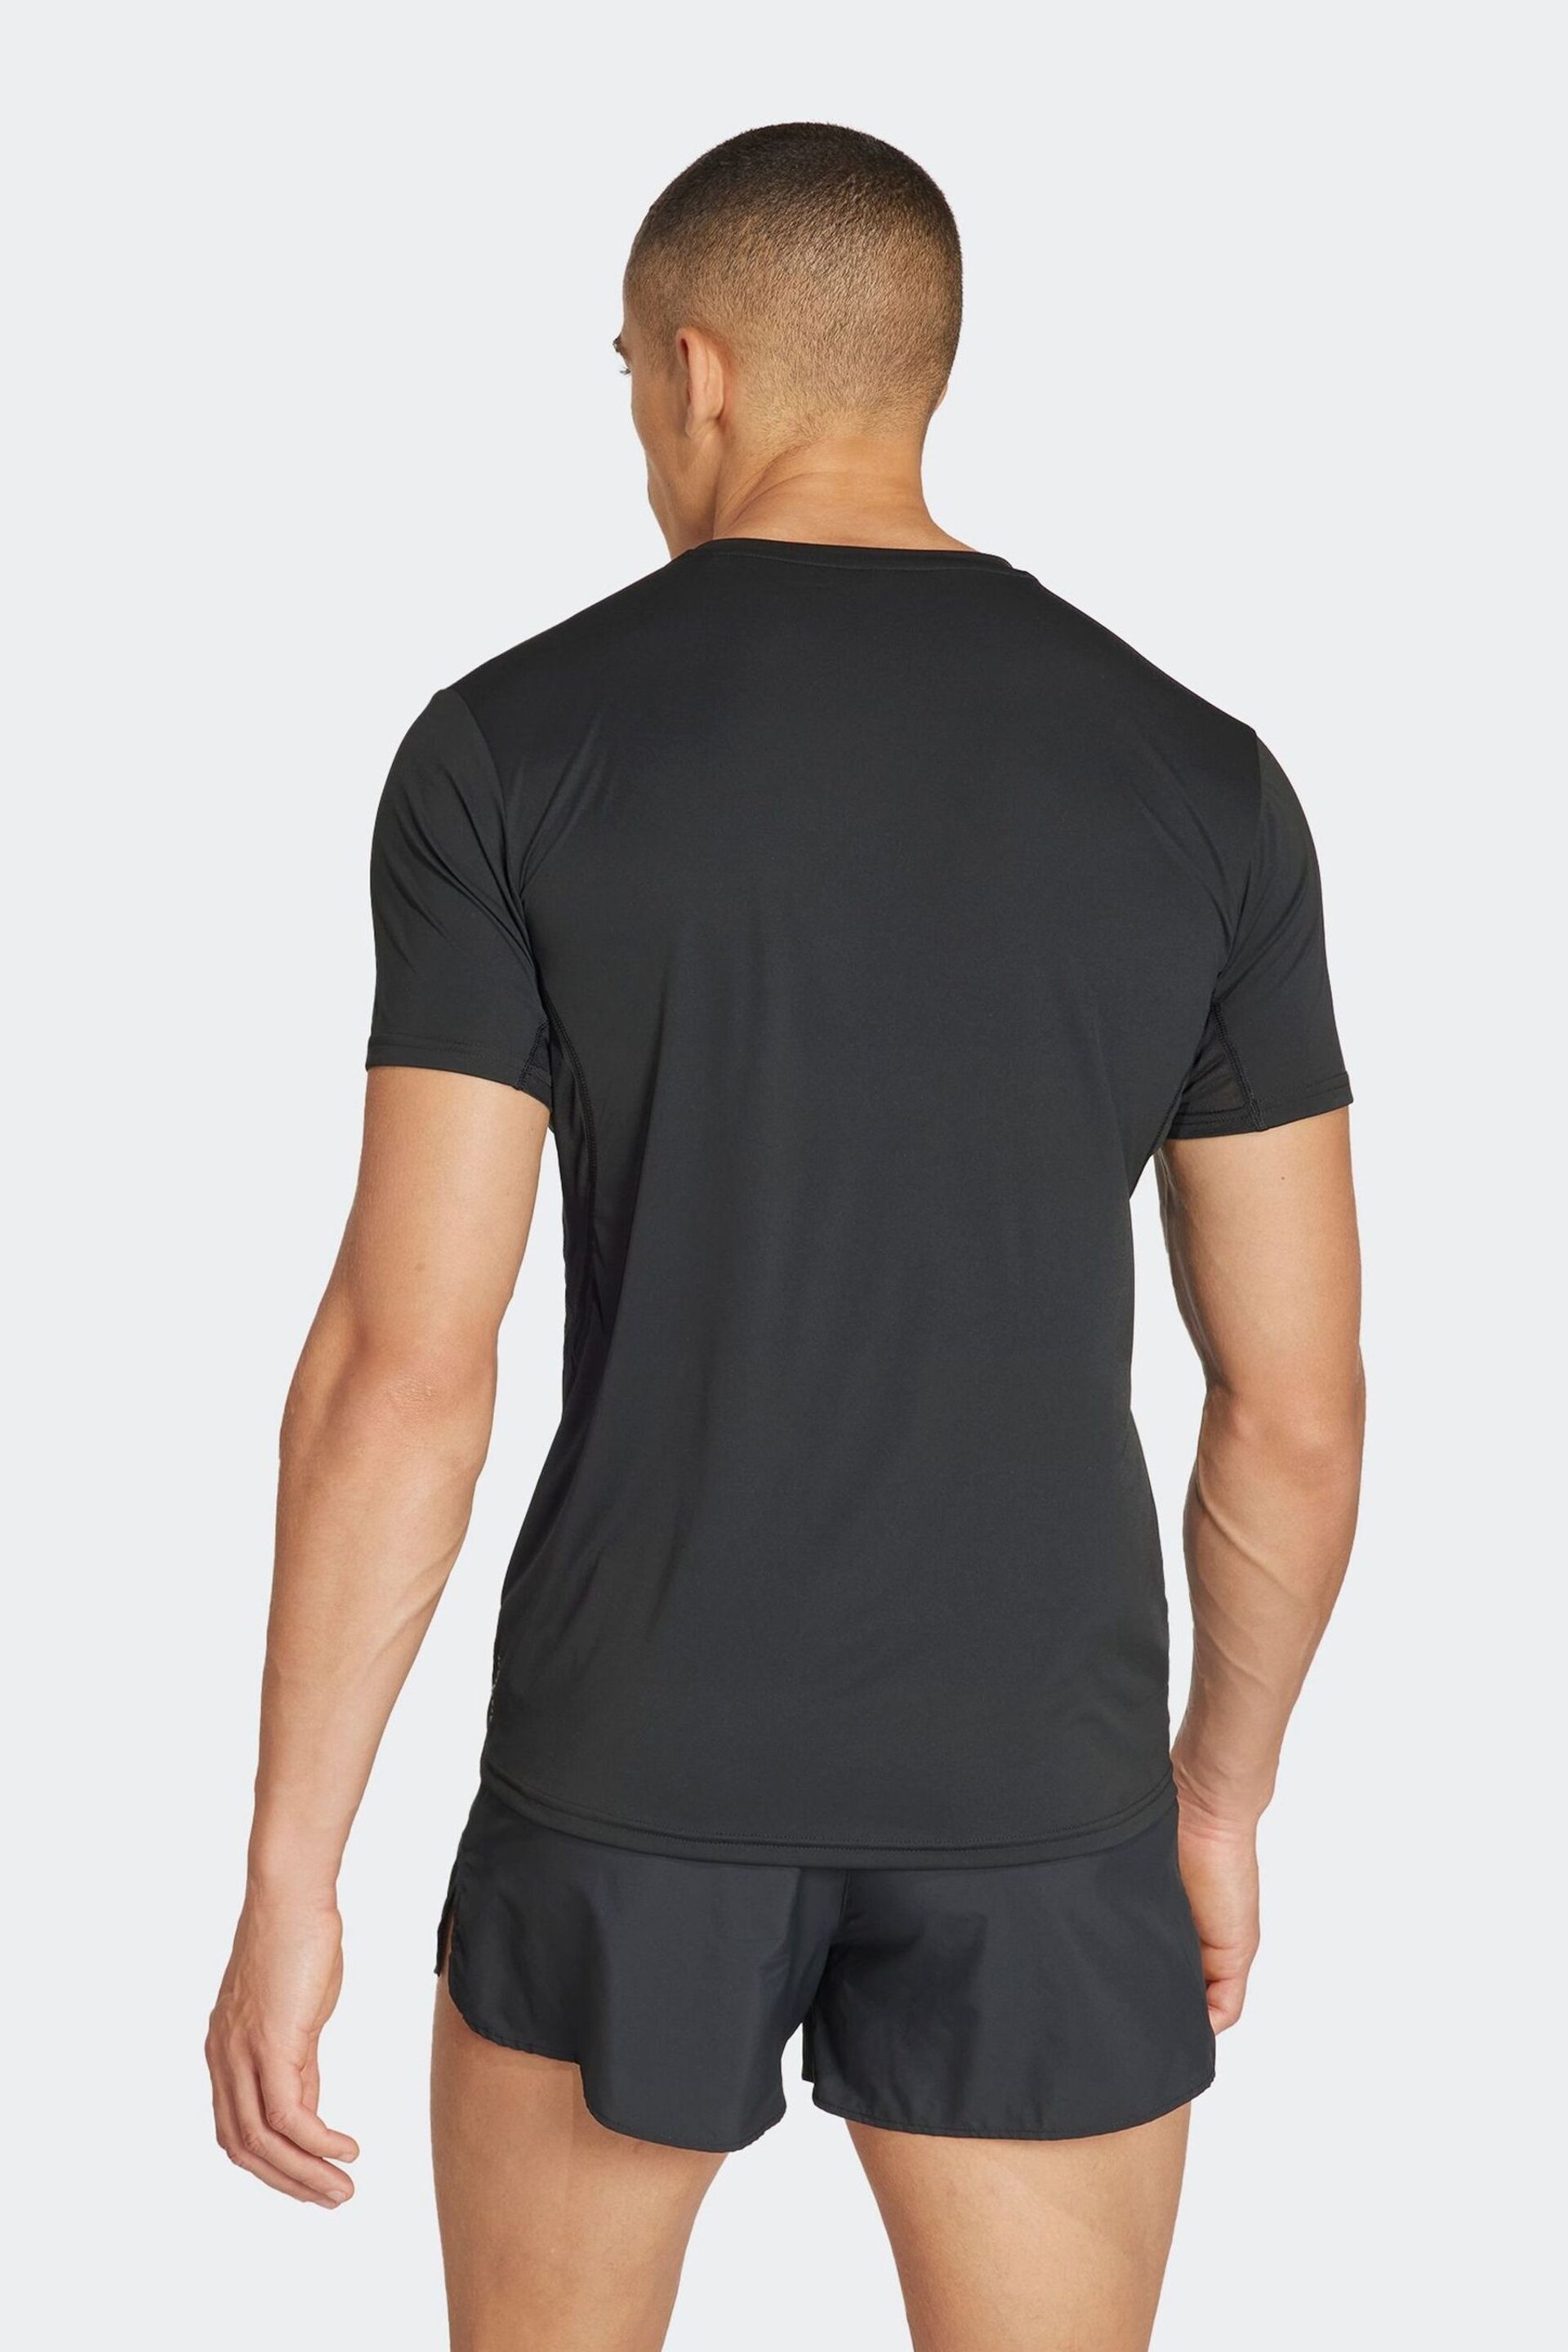 adidas Black Adizero Essentials Running T-Shirt - Image 2 of 5